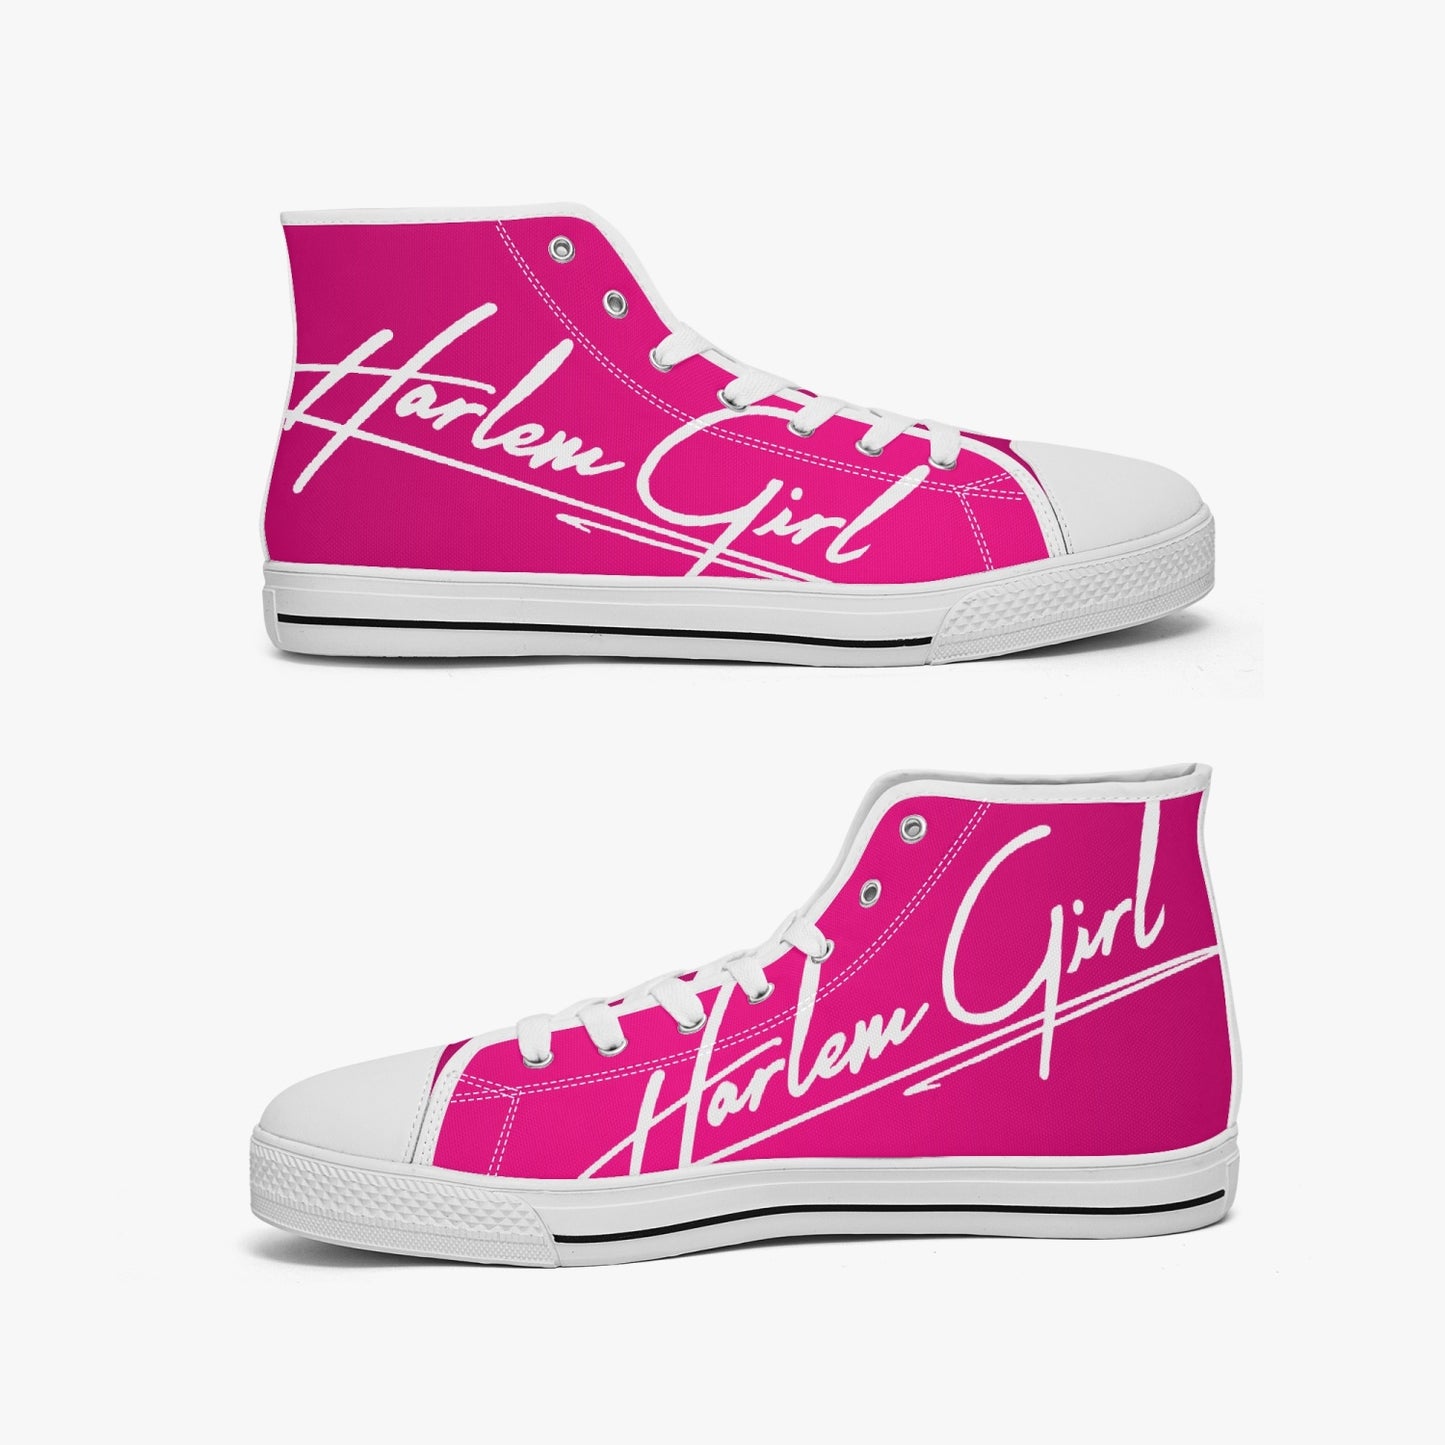 HB Harlem Girl "Lenox Ave" Classic High Top - Fuchsia - Women (Black or White Soles)